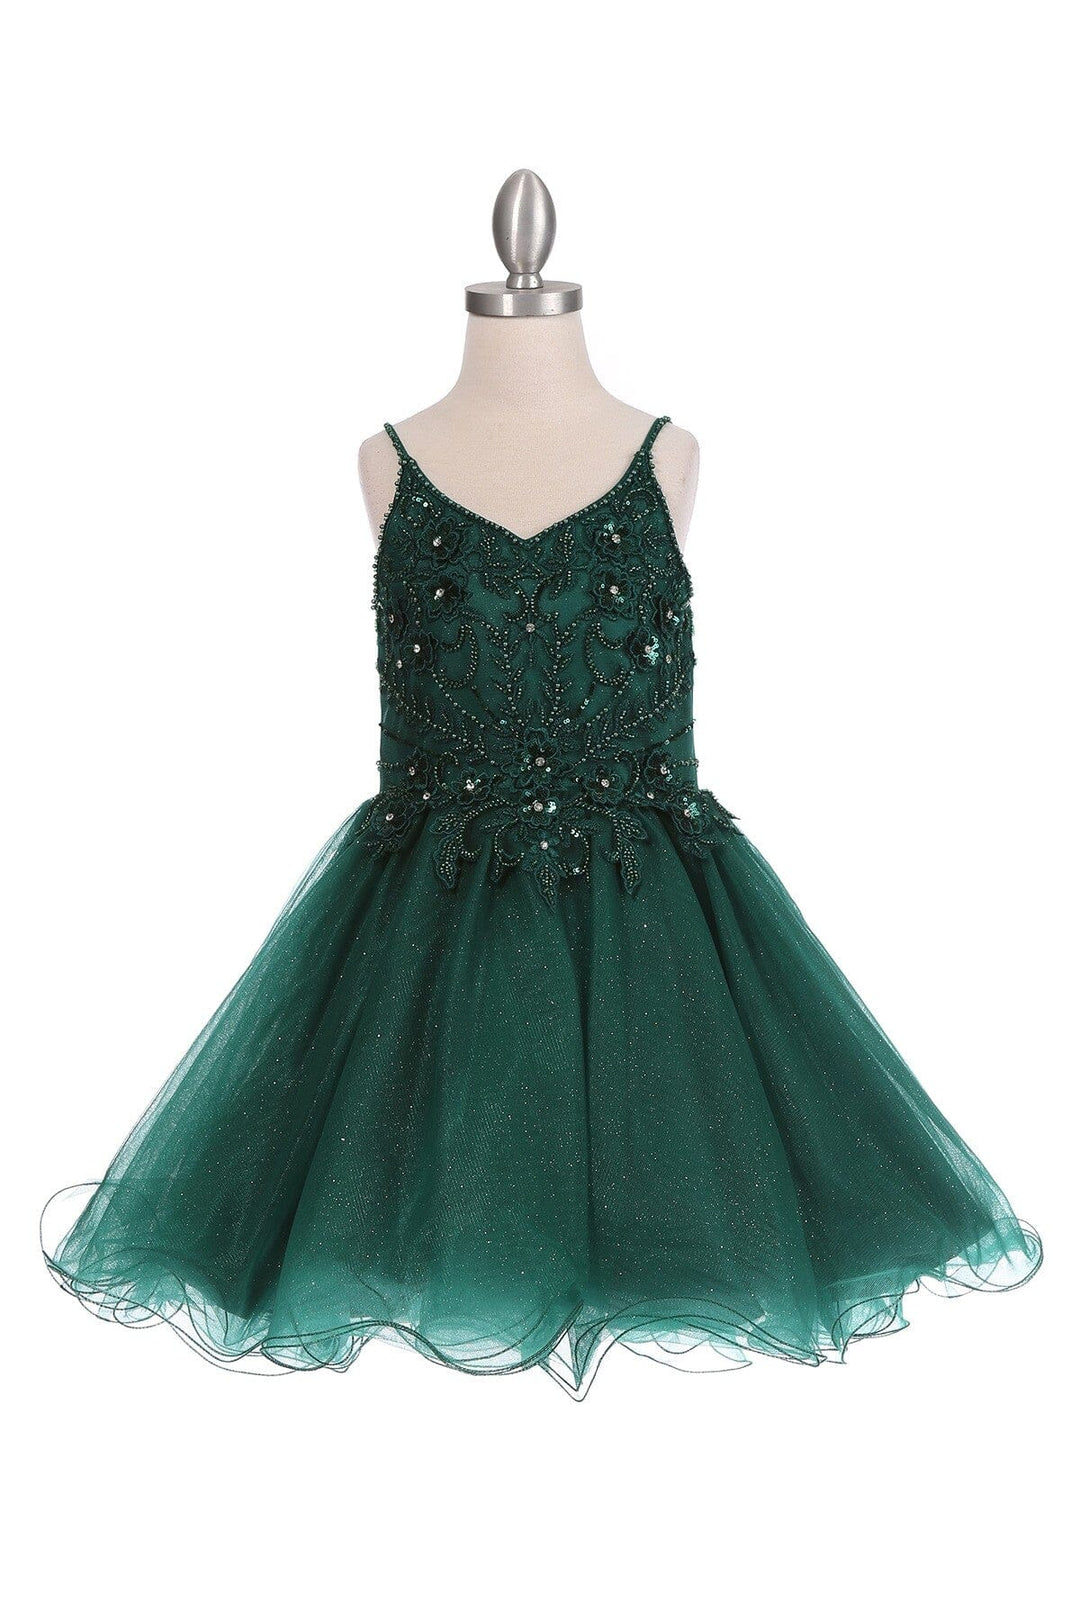 Girls Short Floral Applique Dress by Cinderella Couture 5112